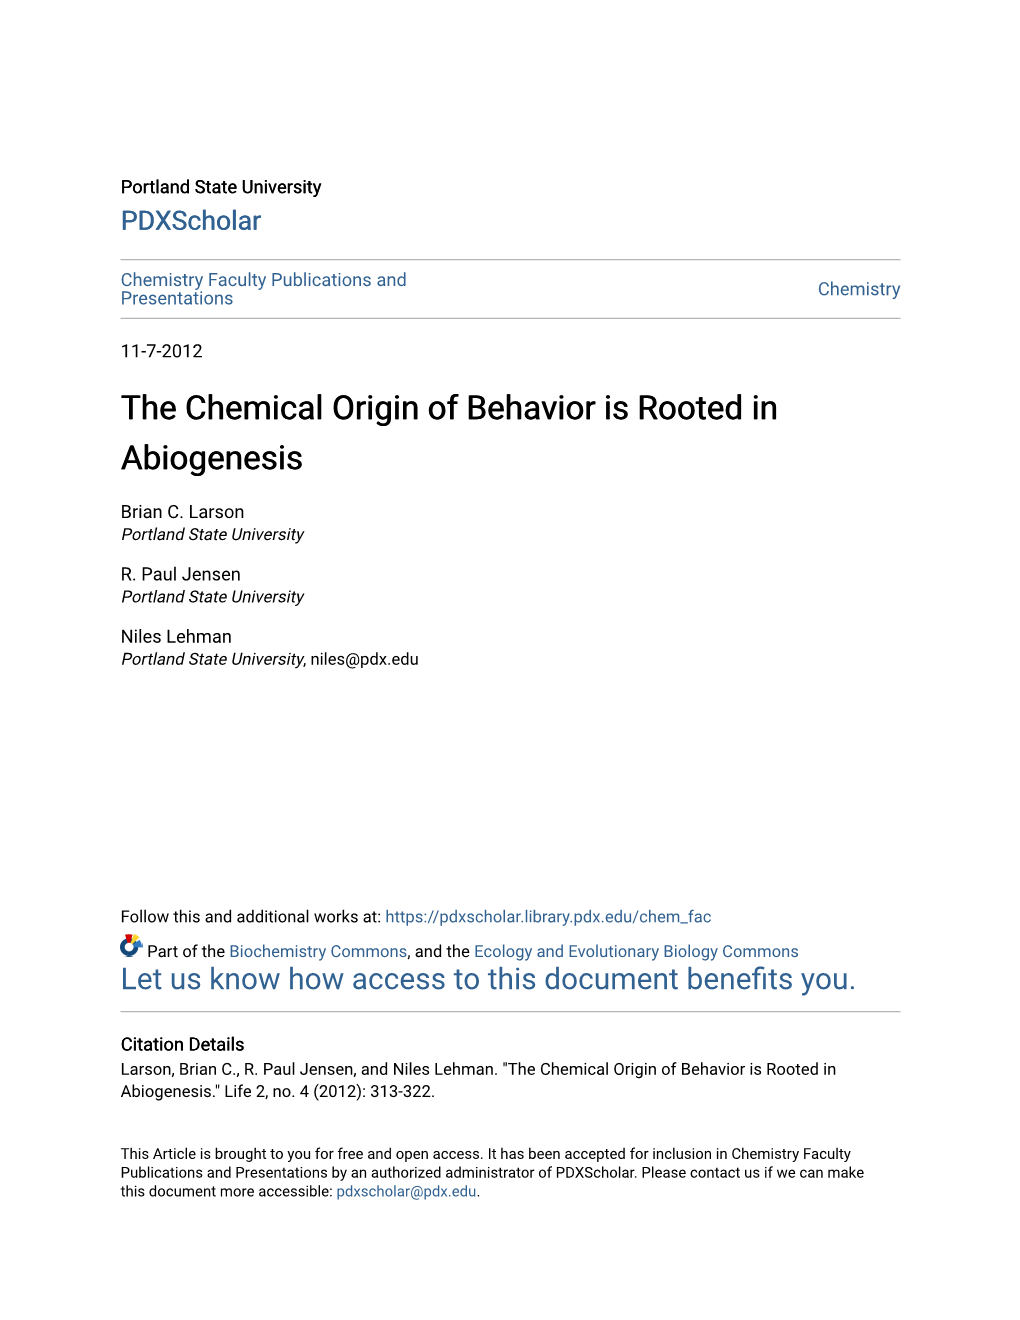 The Chemical Origin of Behavior Is Rooted in Abiogenesis